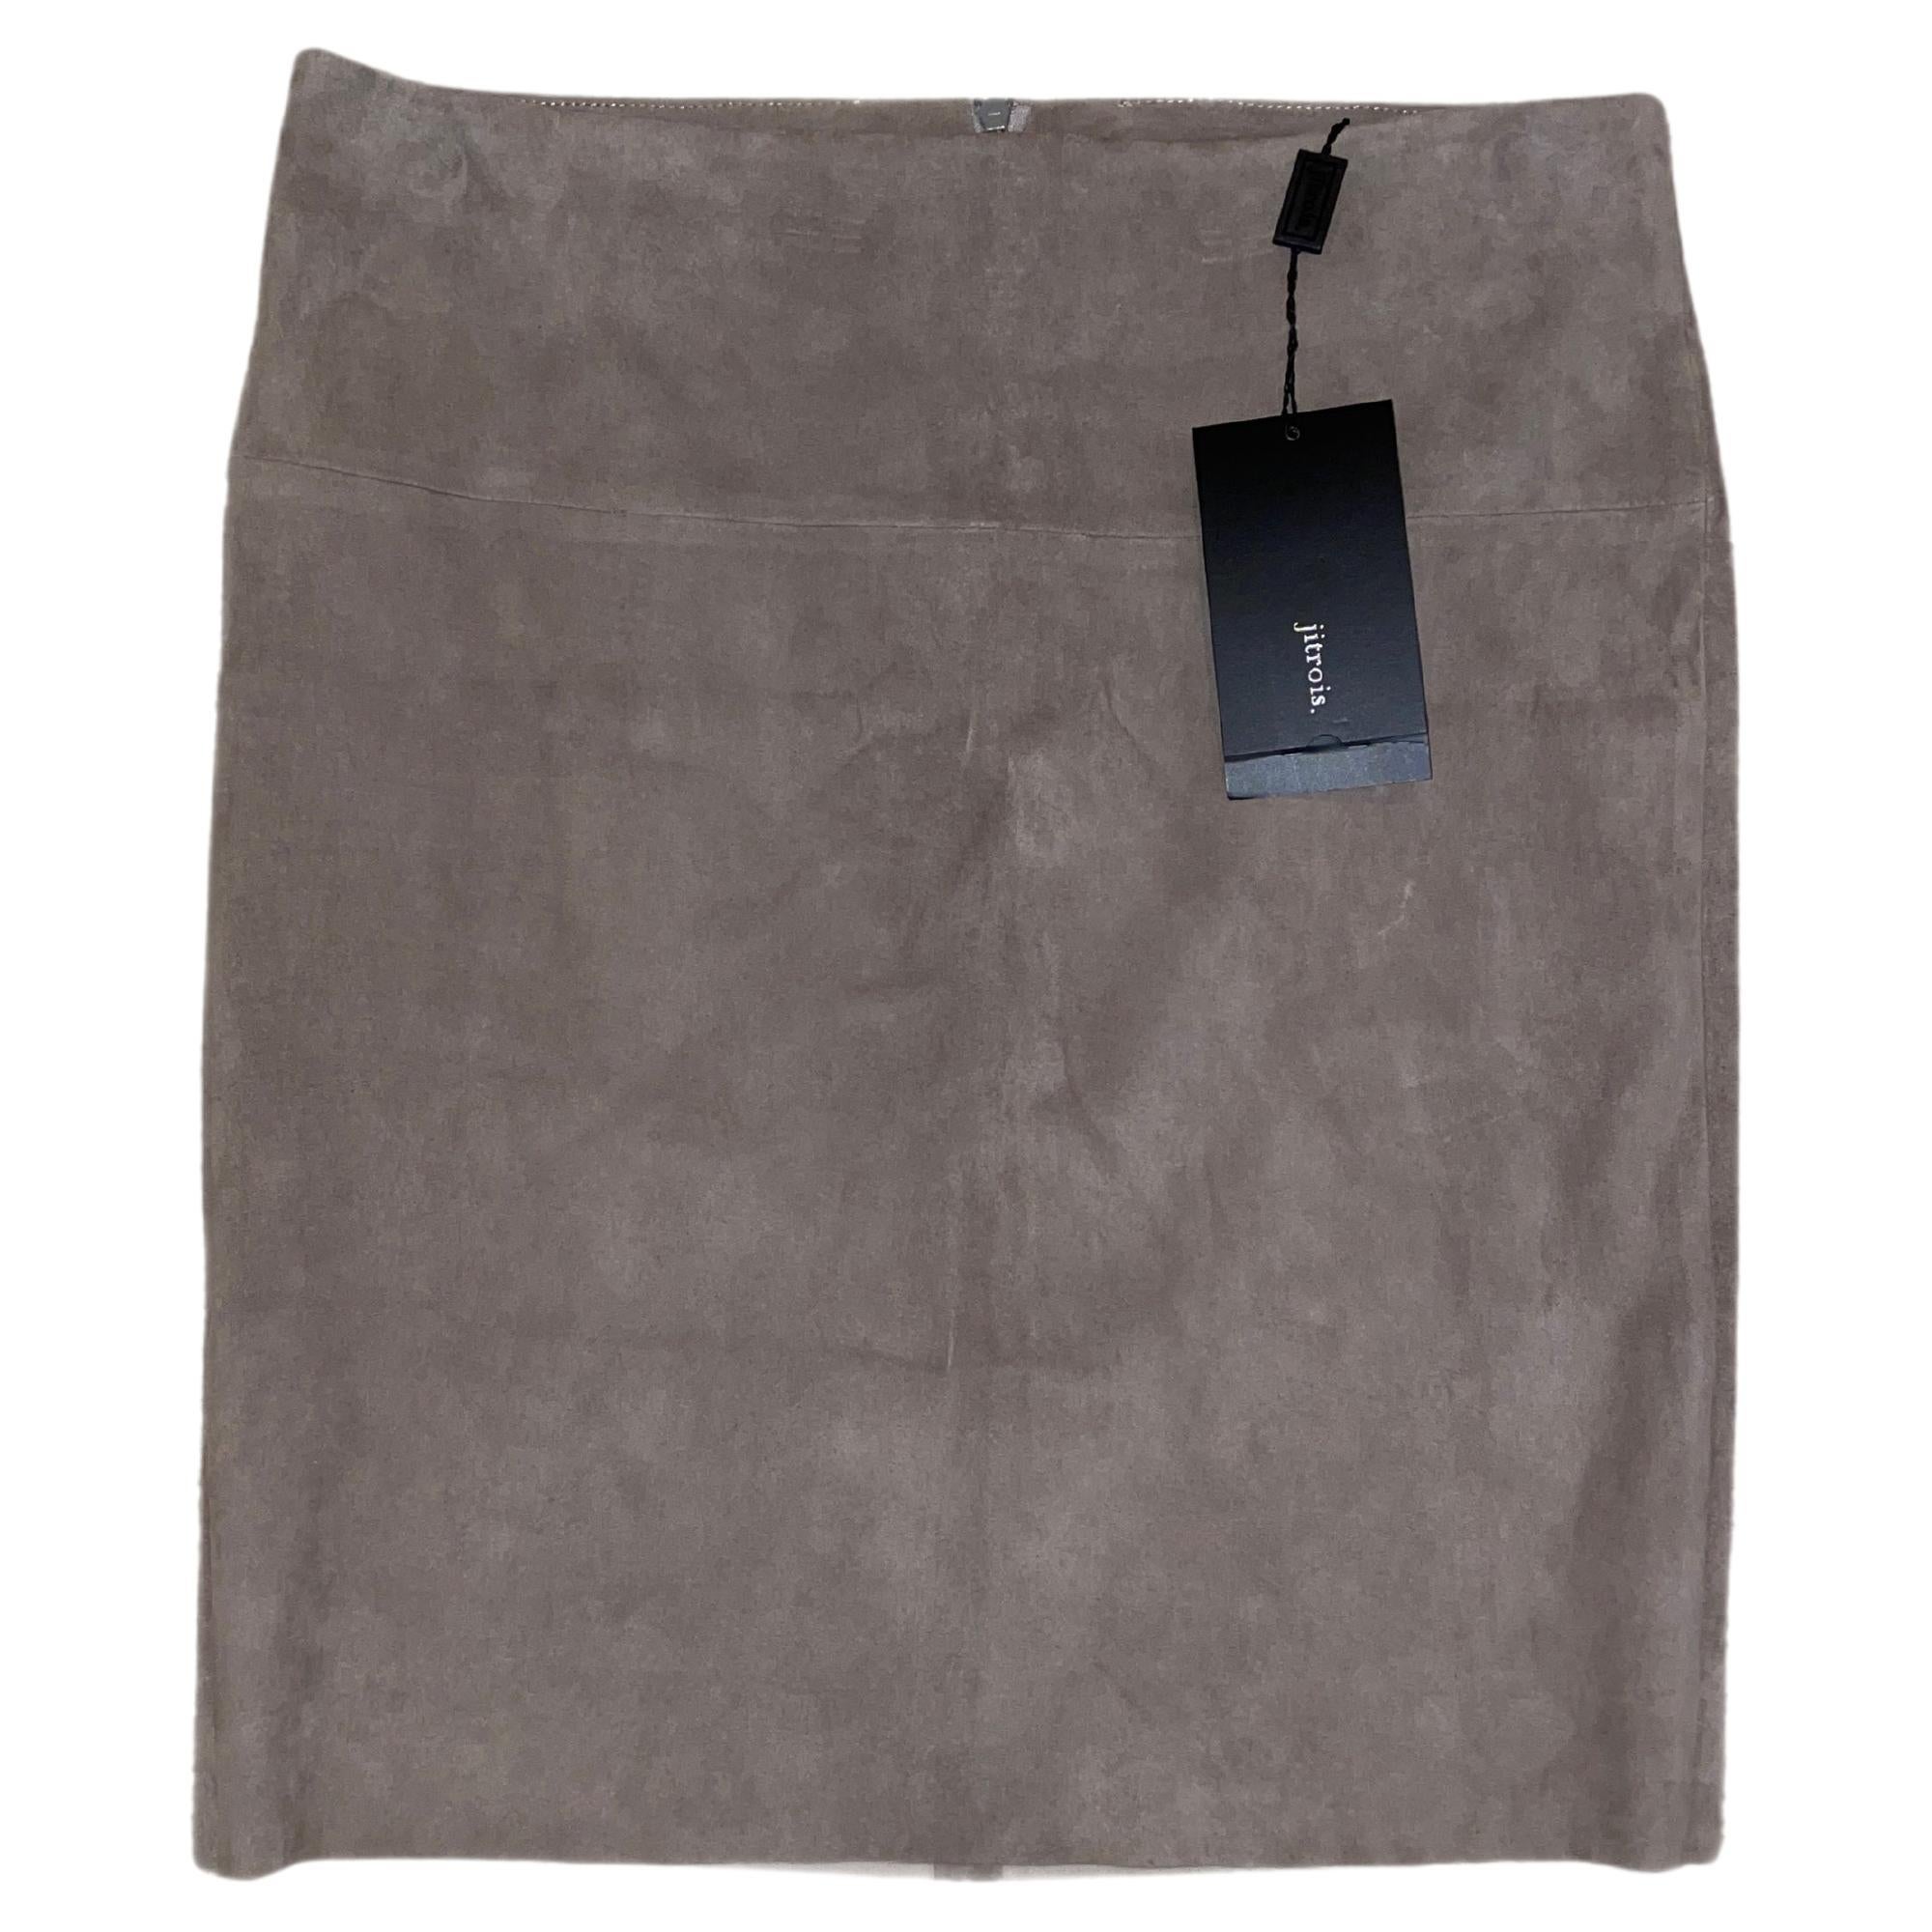 JITROIS stretch suede khaki beige pencil skirt For Sale